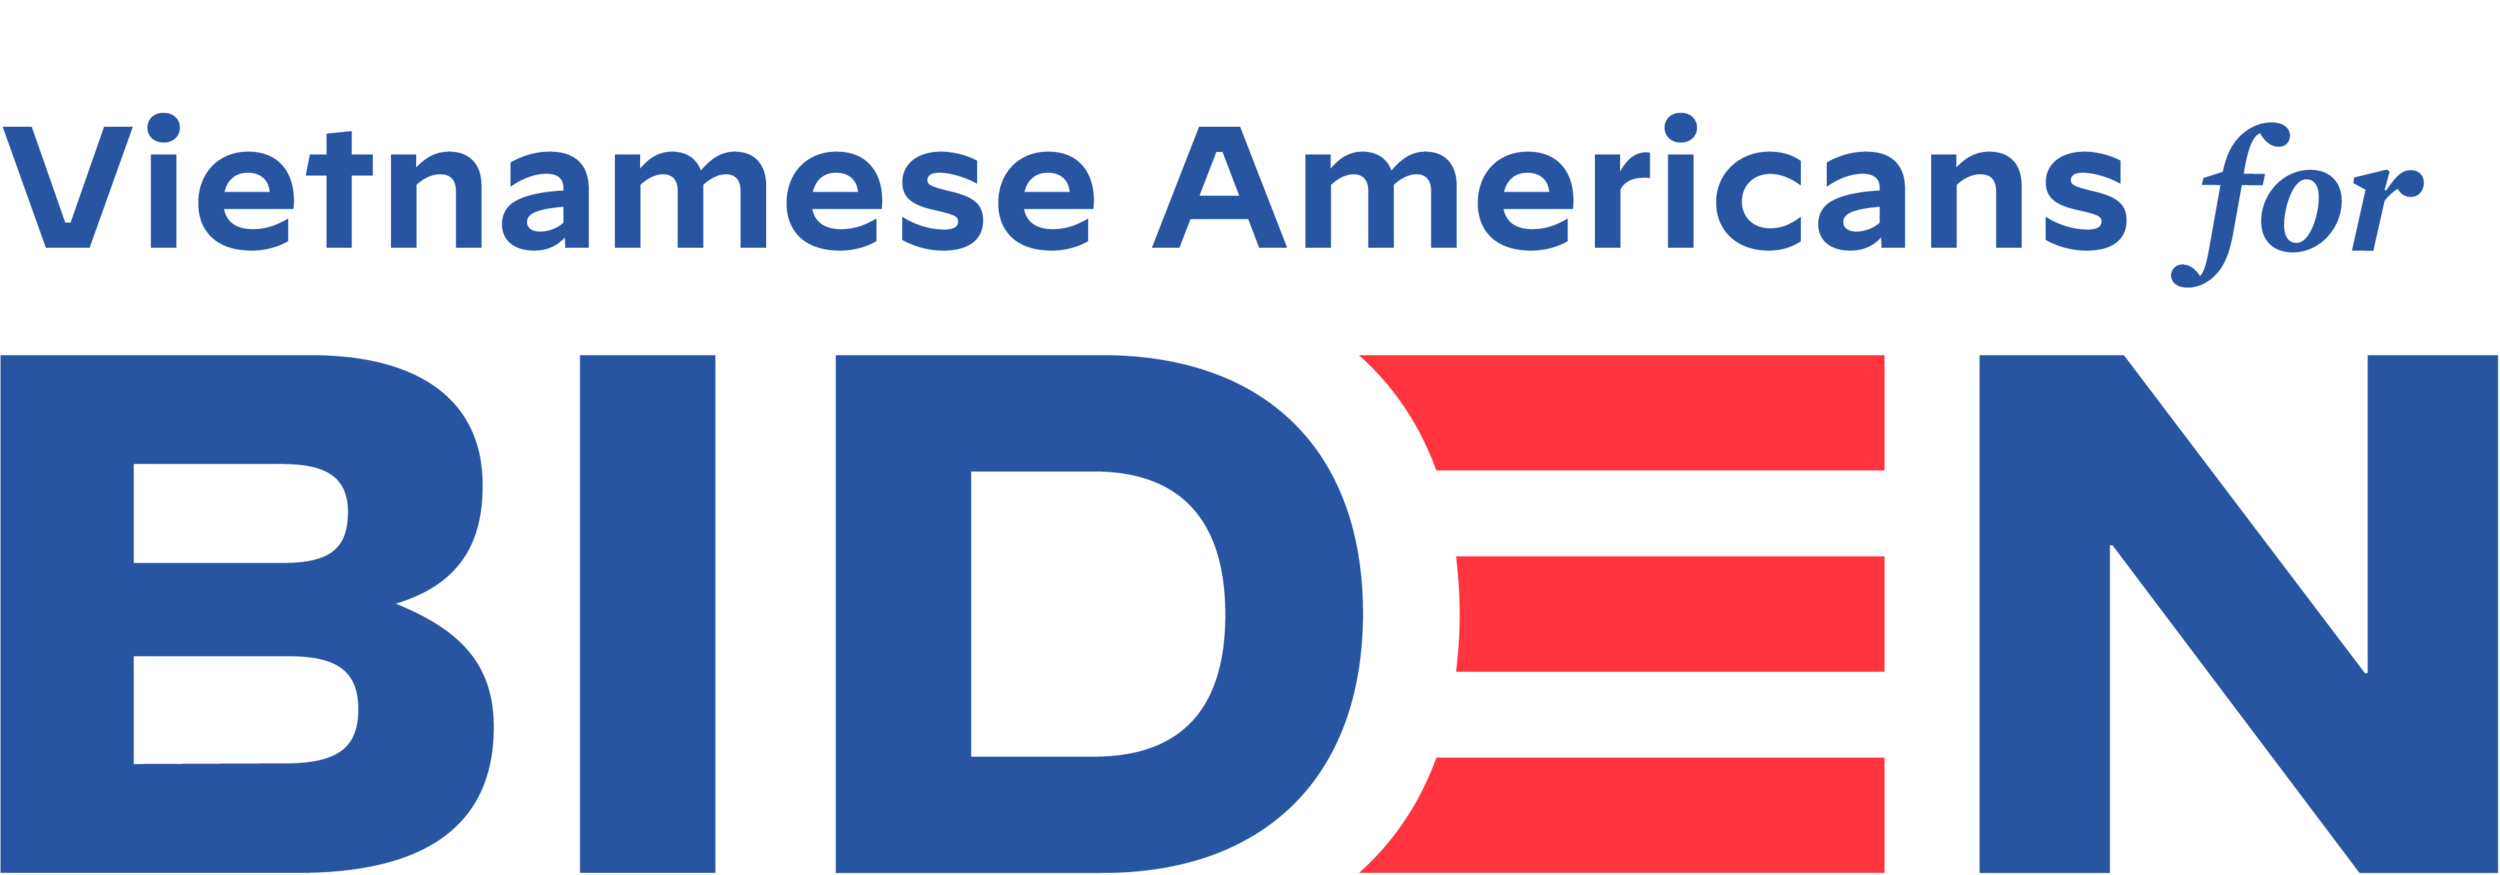 Vietnamese Americans for BIDEN_logo_0820_Union Blue.png